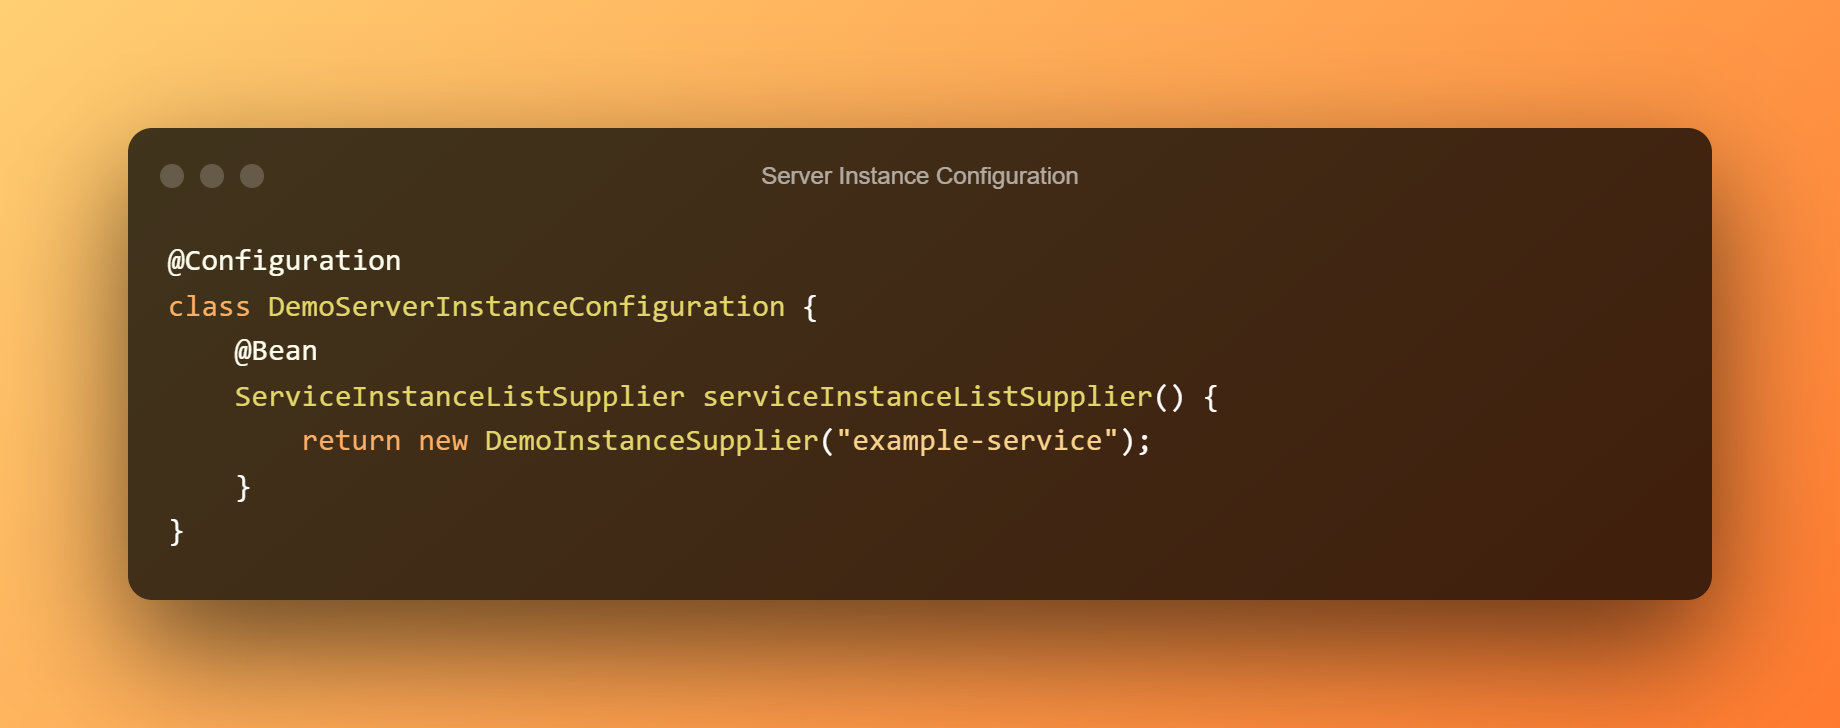 Server Instance Configuration